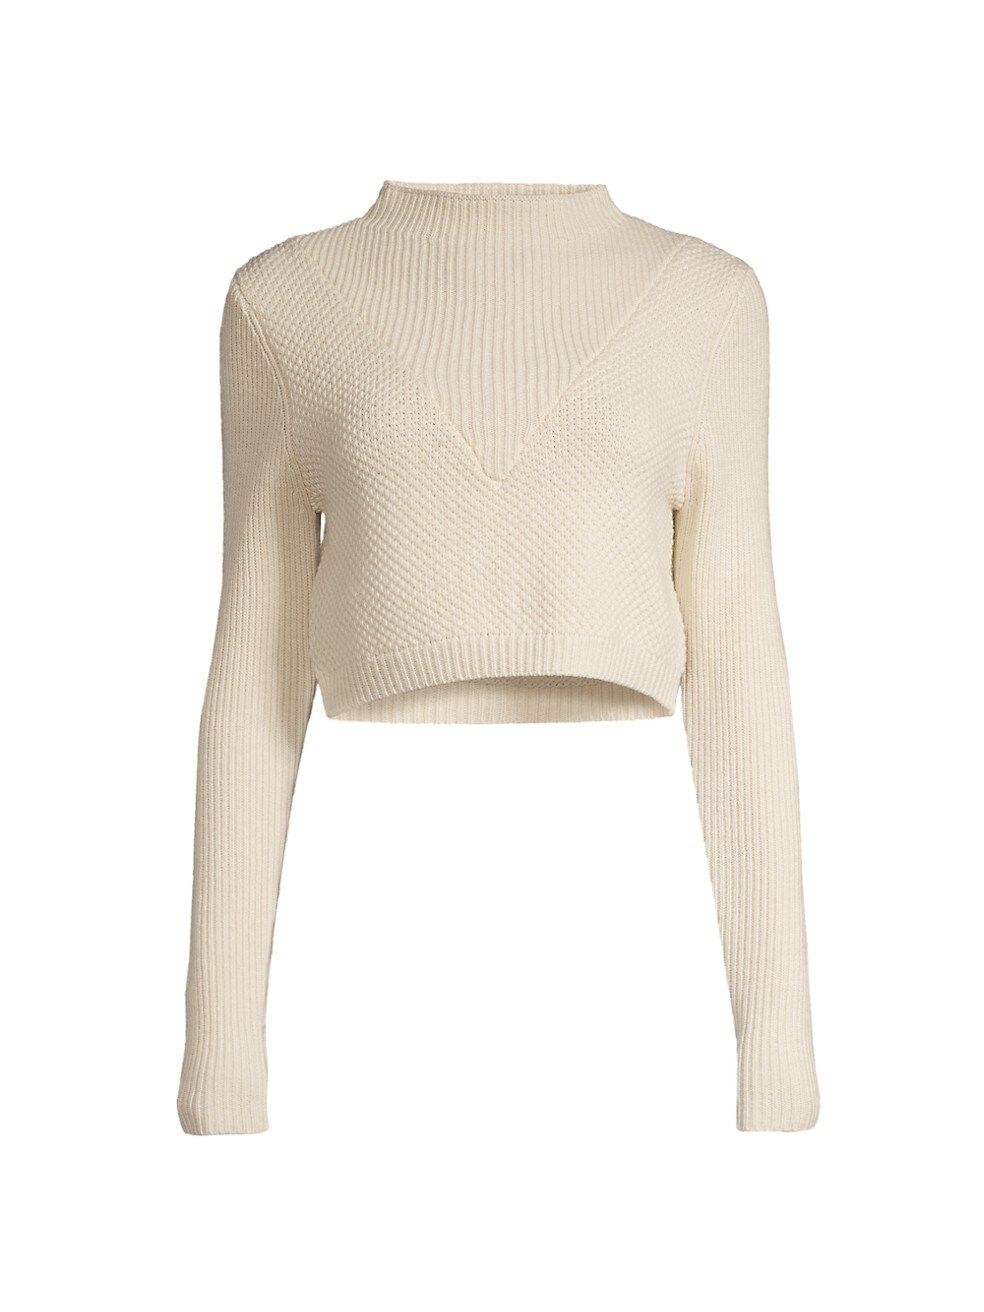 Victor Glemaud Cropped Mock Turtleneck Sweater | Saks Fifth Avenue